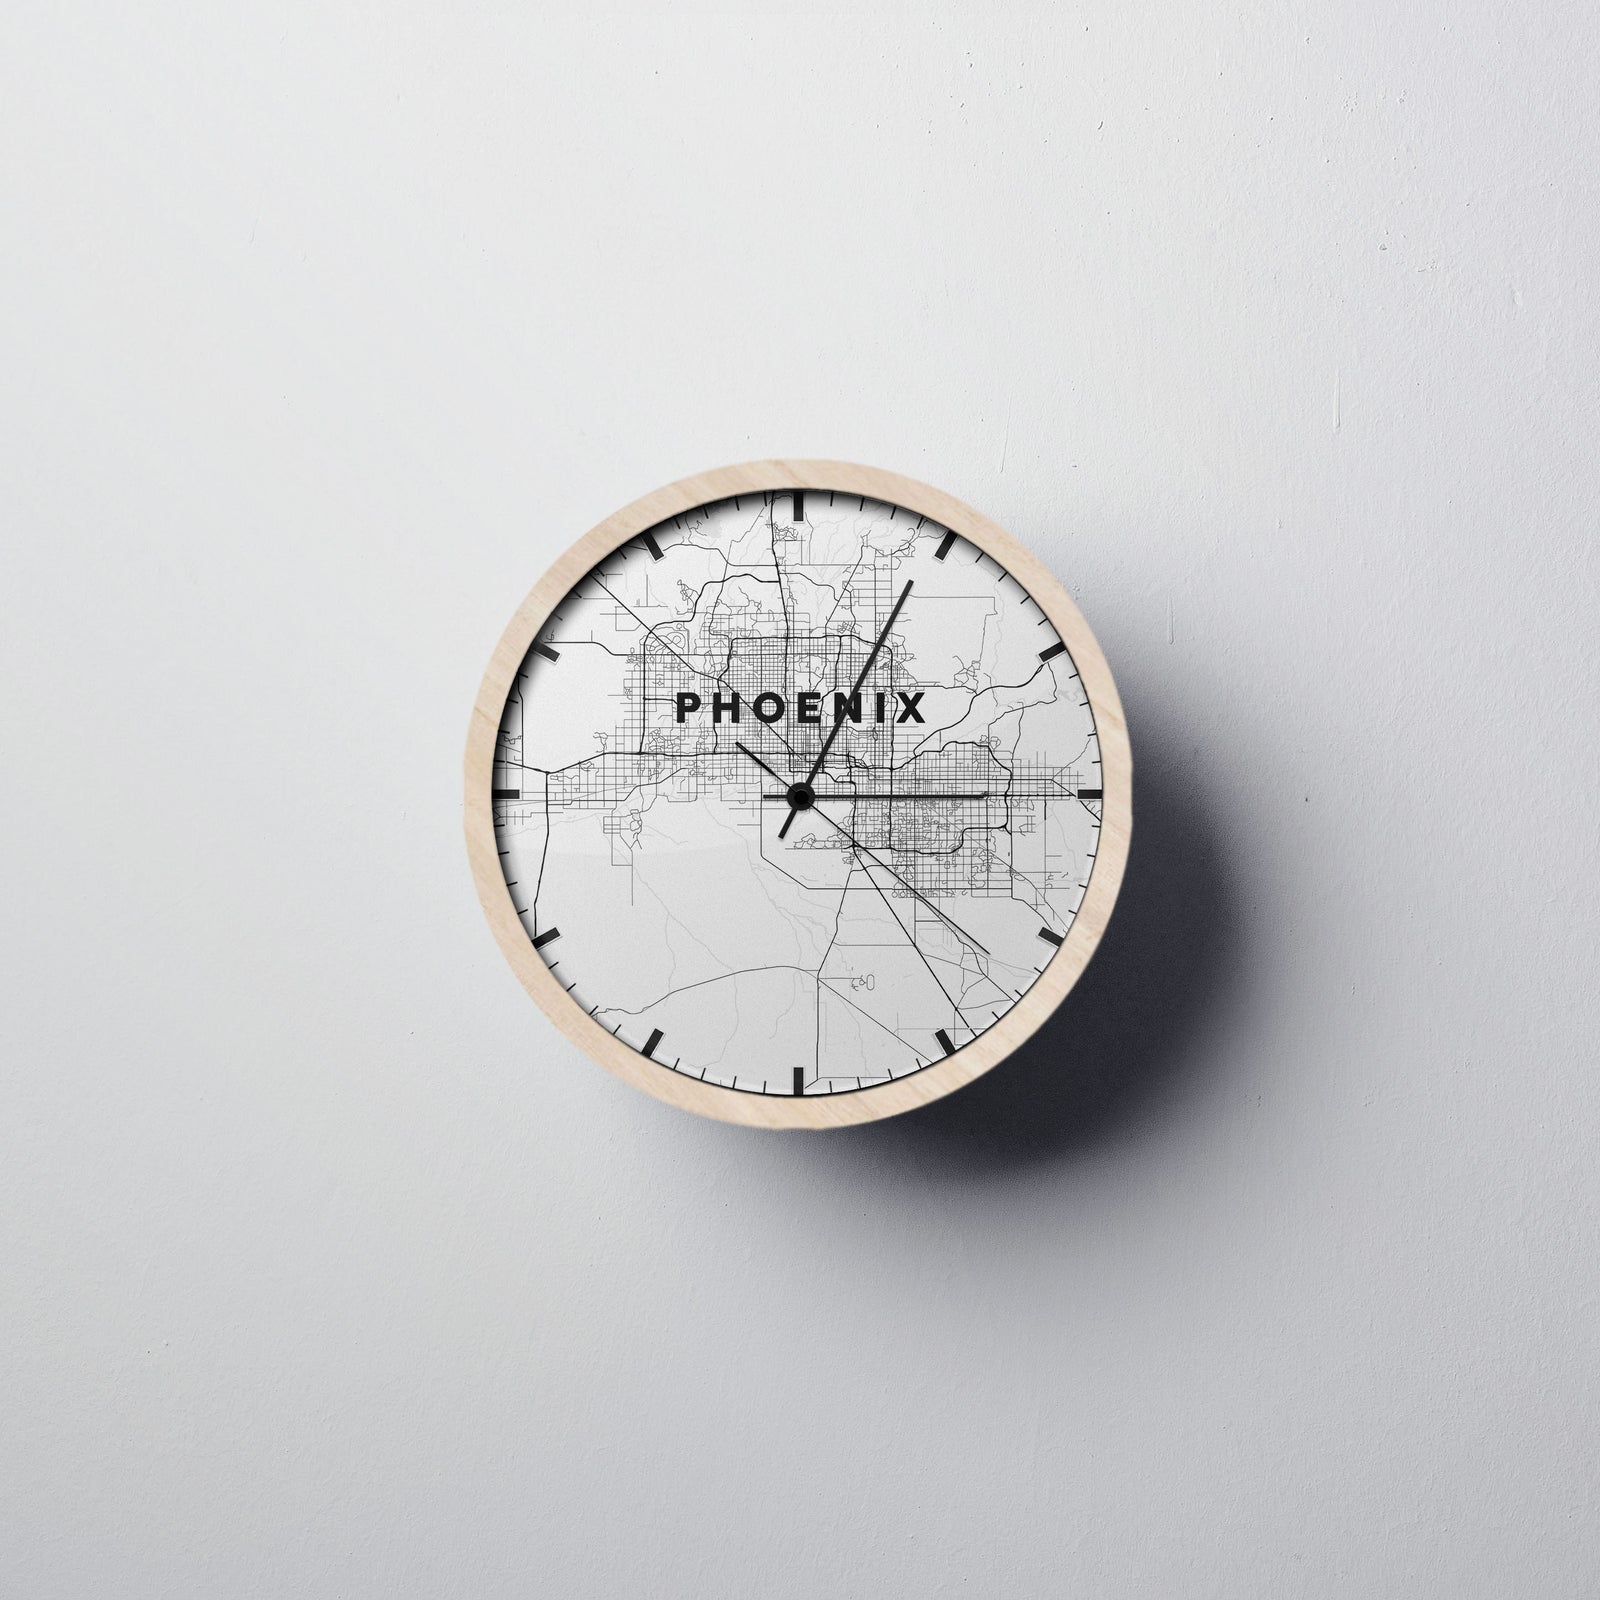 Modern Wall Clocks - City Map Wall Clock Design - Point Two Design Tagged  phoenix